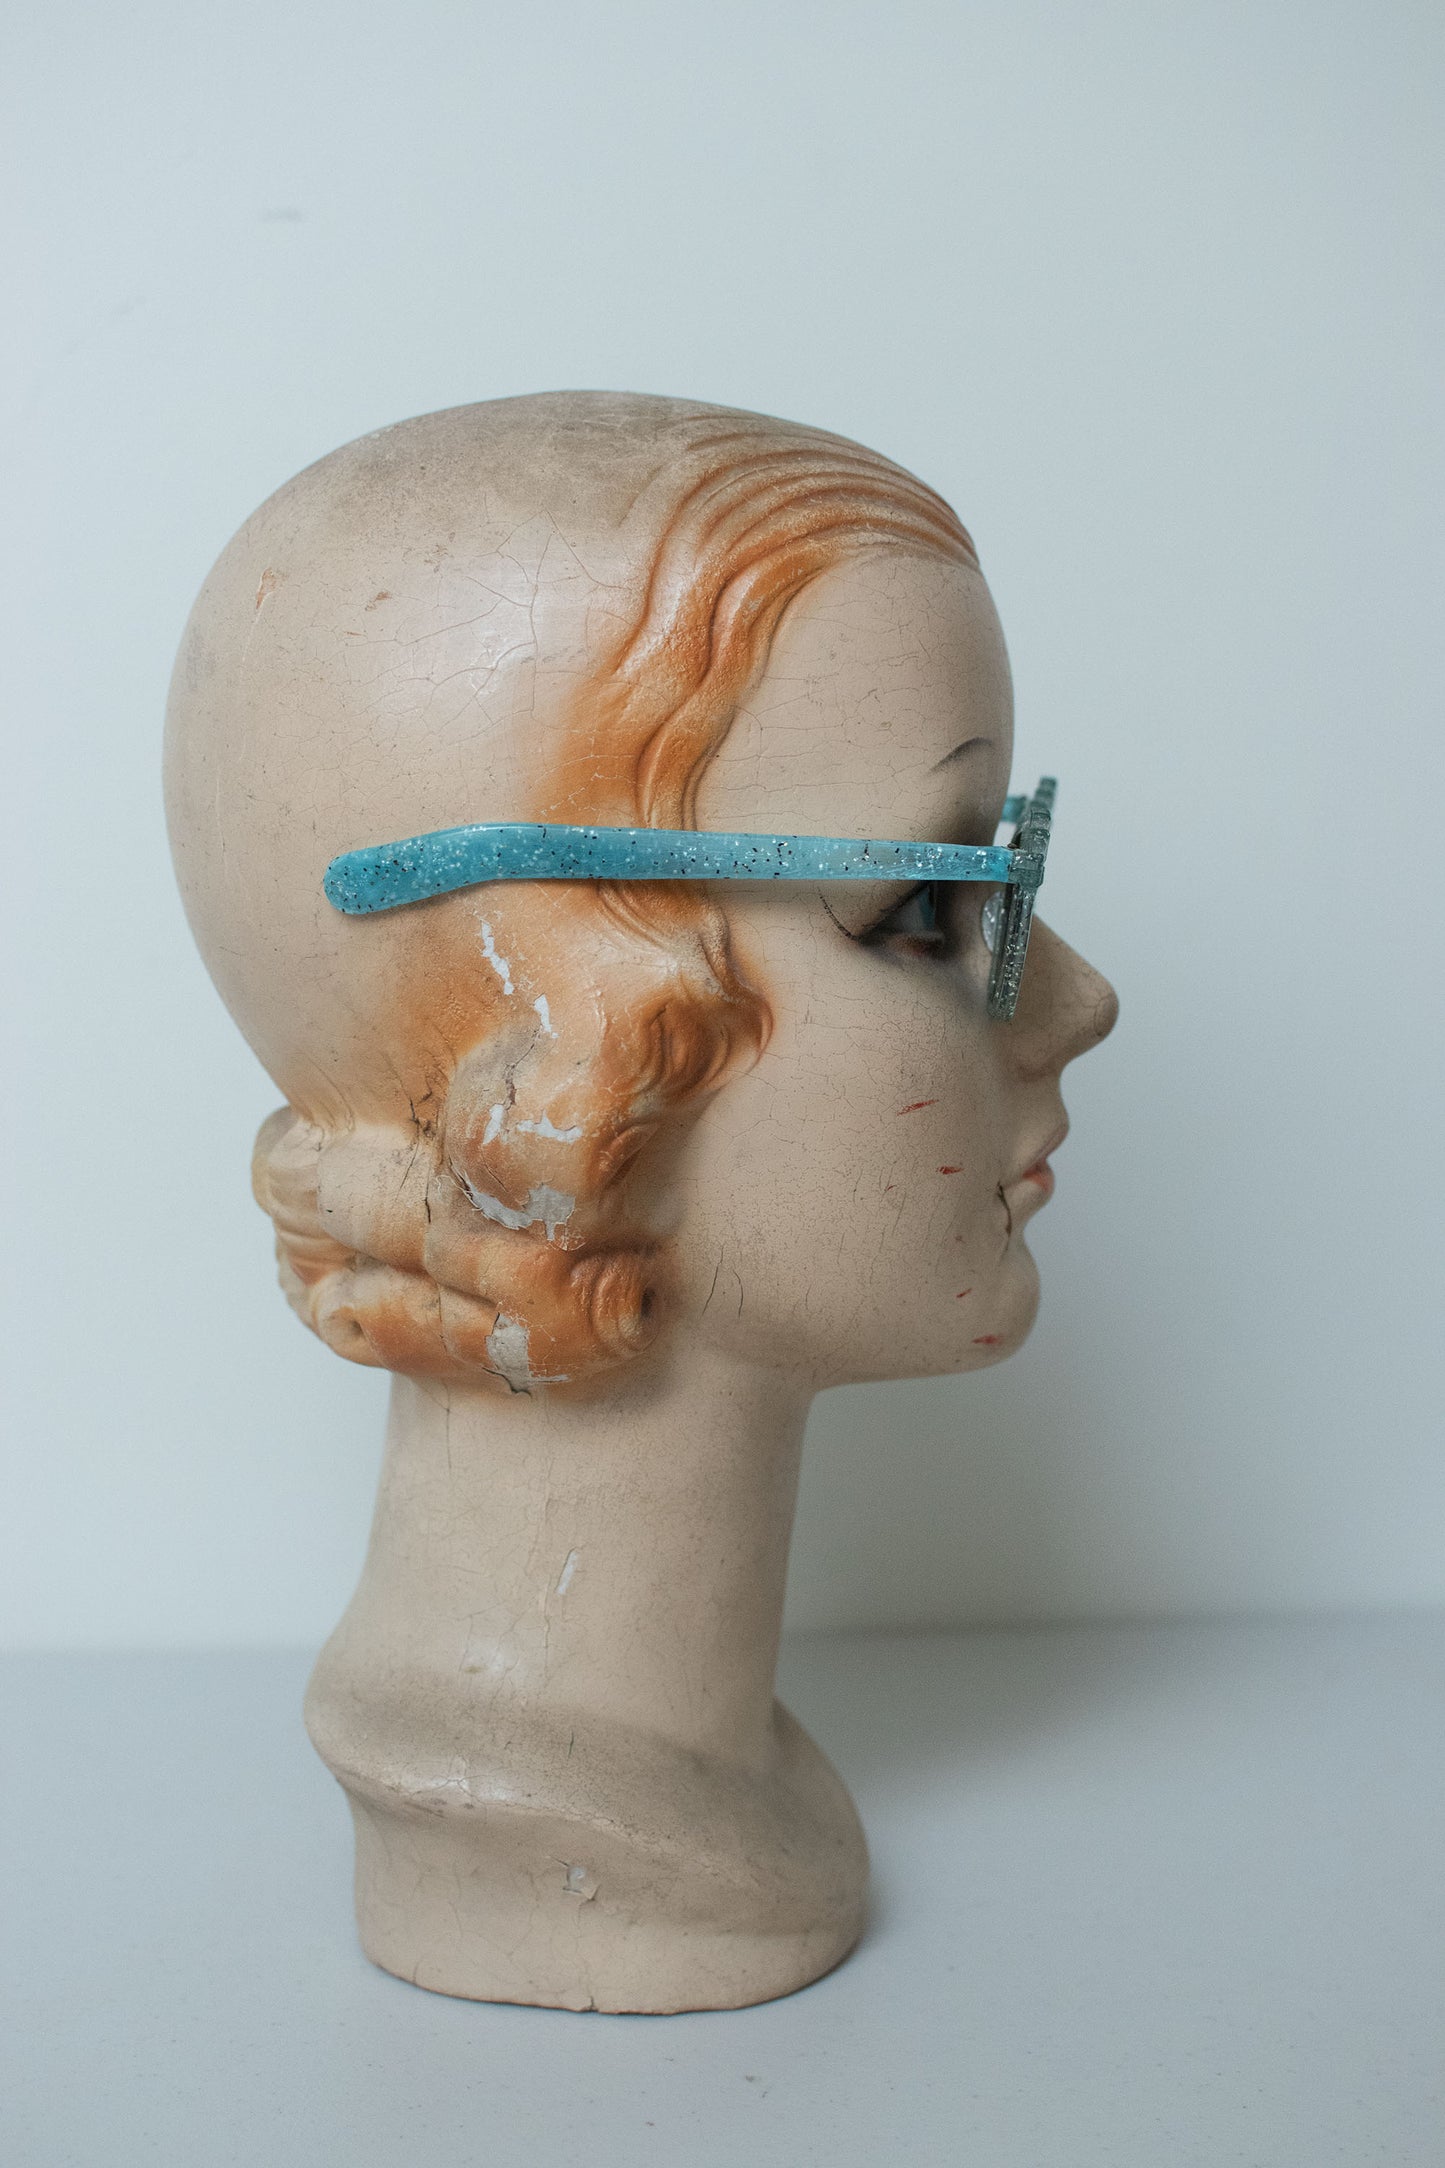 1950s Blue Glitter Sunglasses